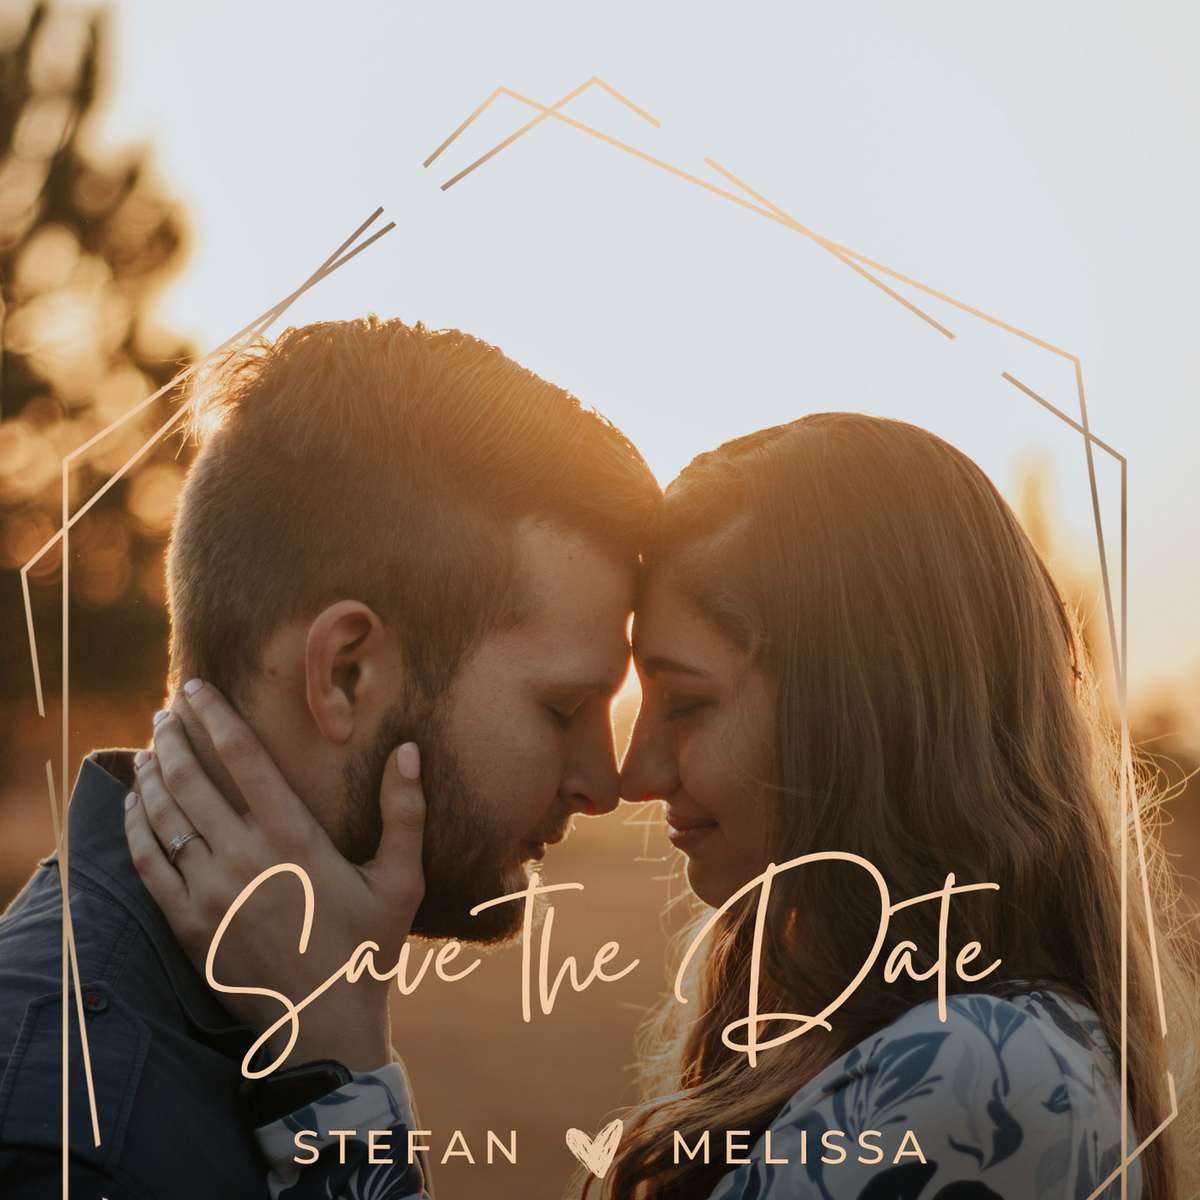 Stefan en Melissa - Save the Date плъзгащ се пъзел онлайн